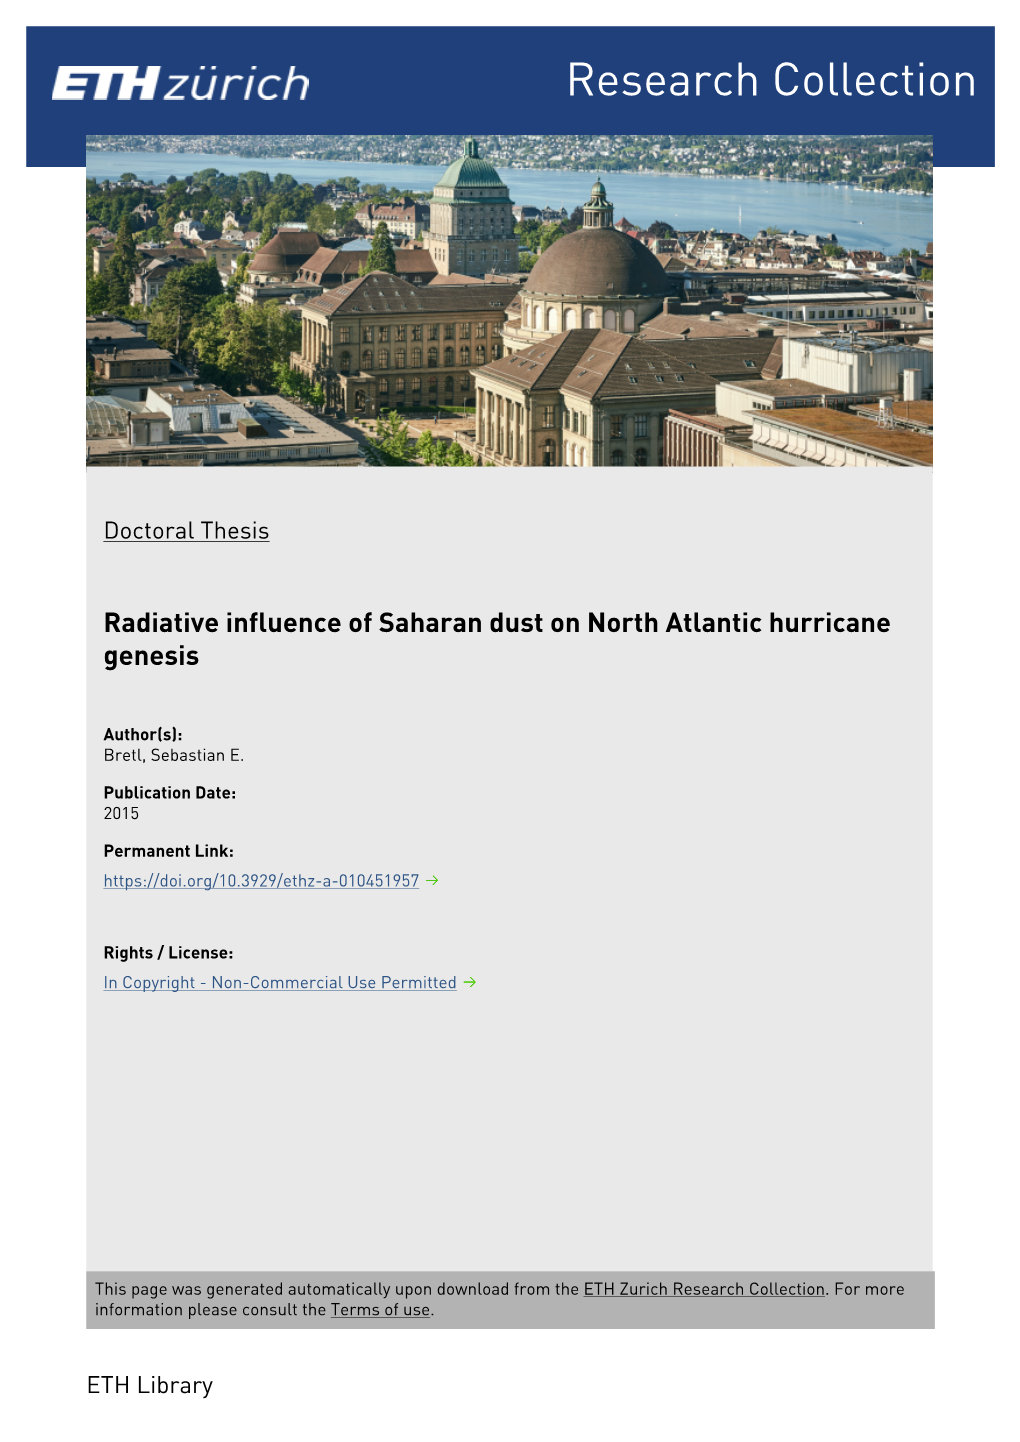 Radiative Influence of Saharan Dust on North Atlantic Hurricane Genesis